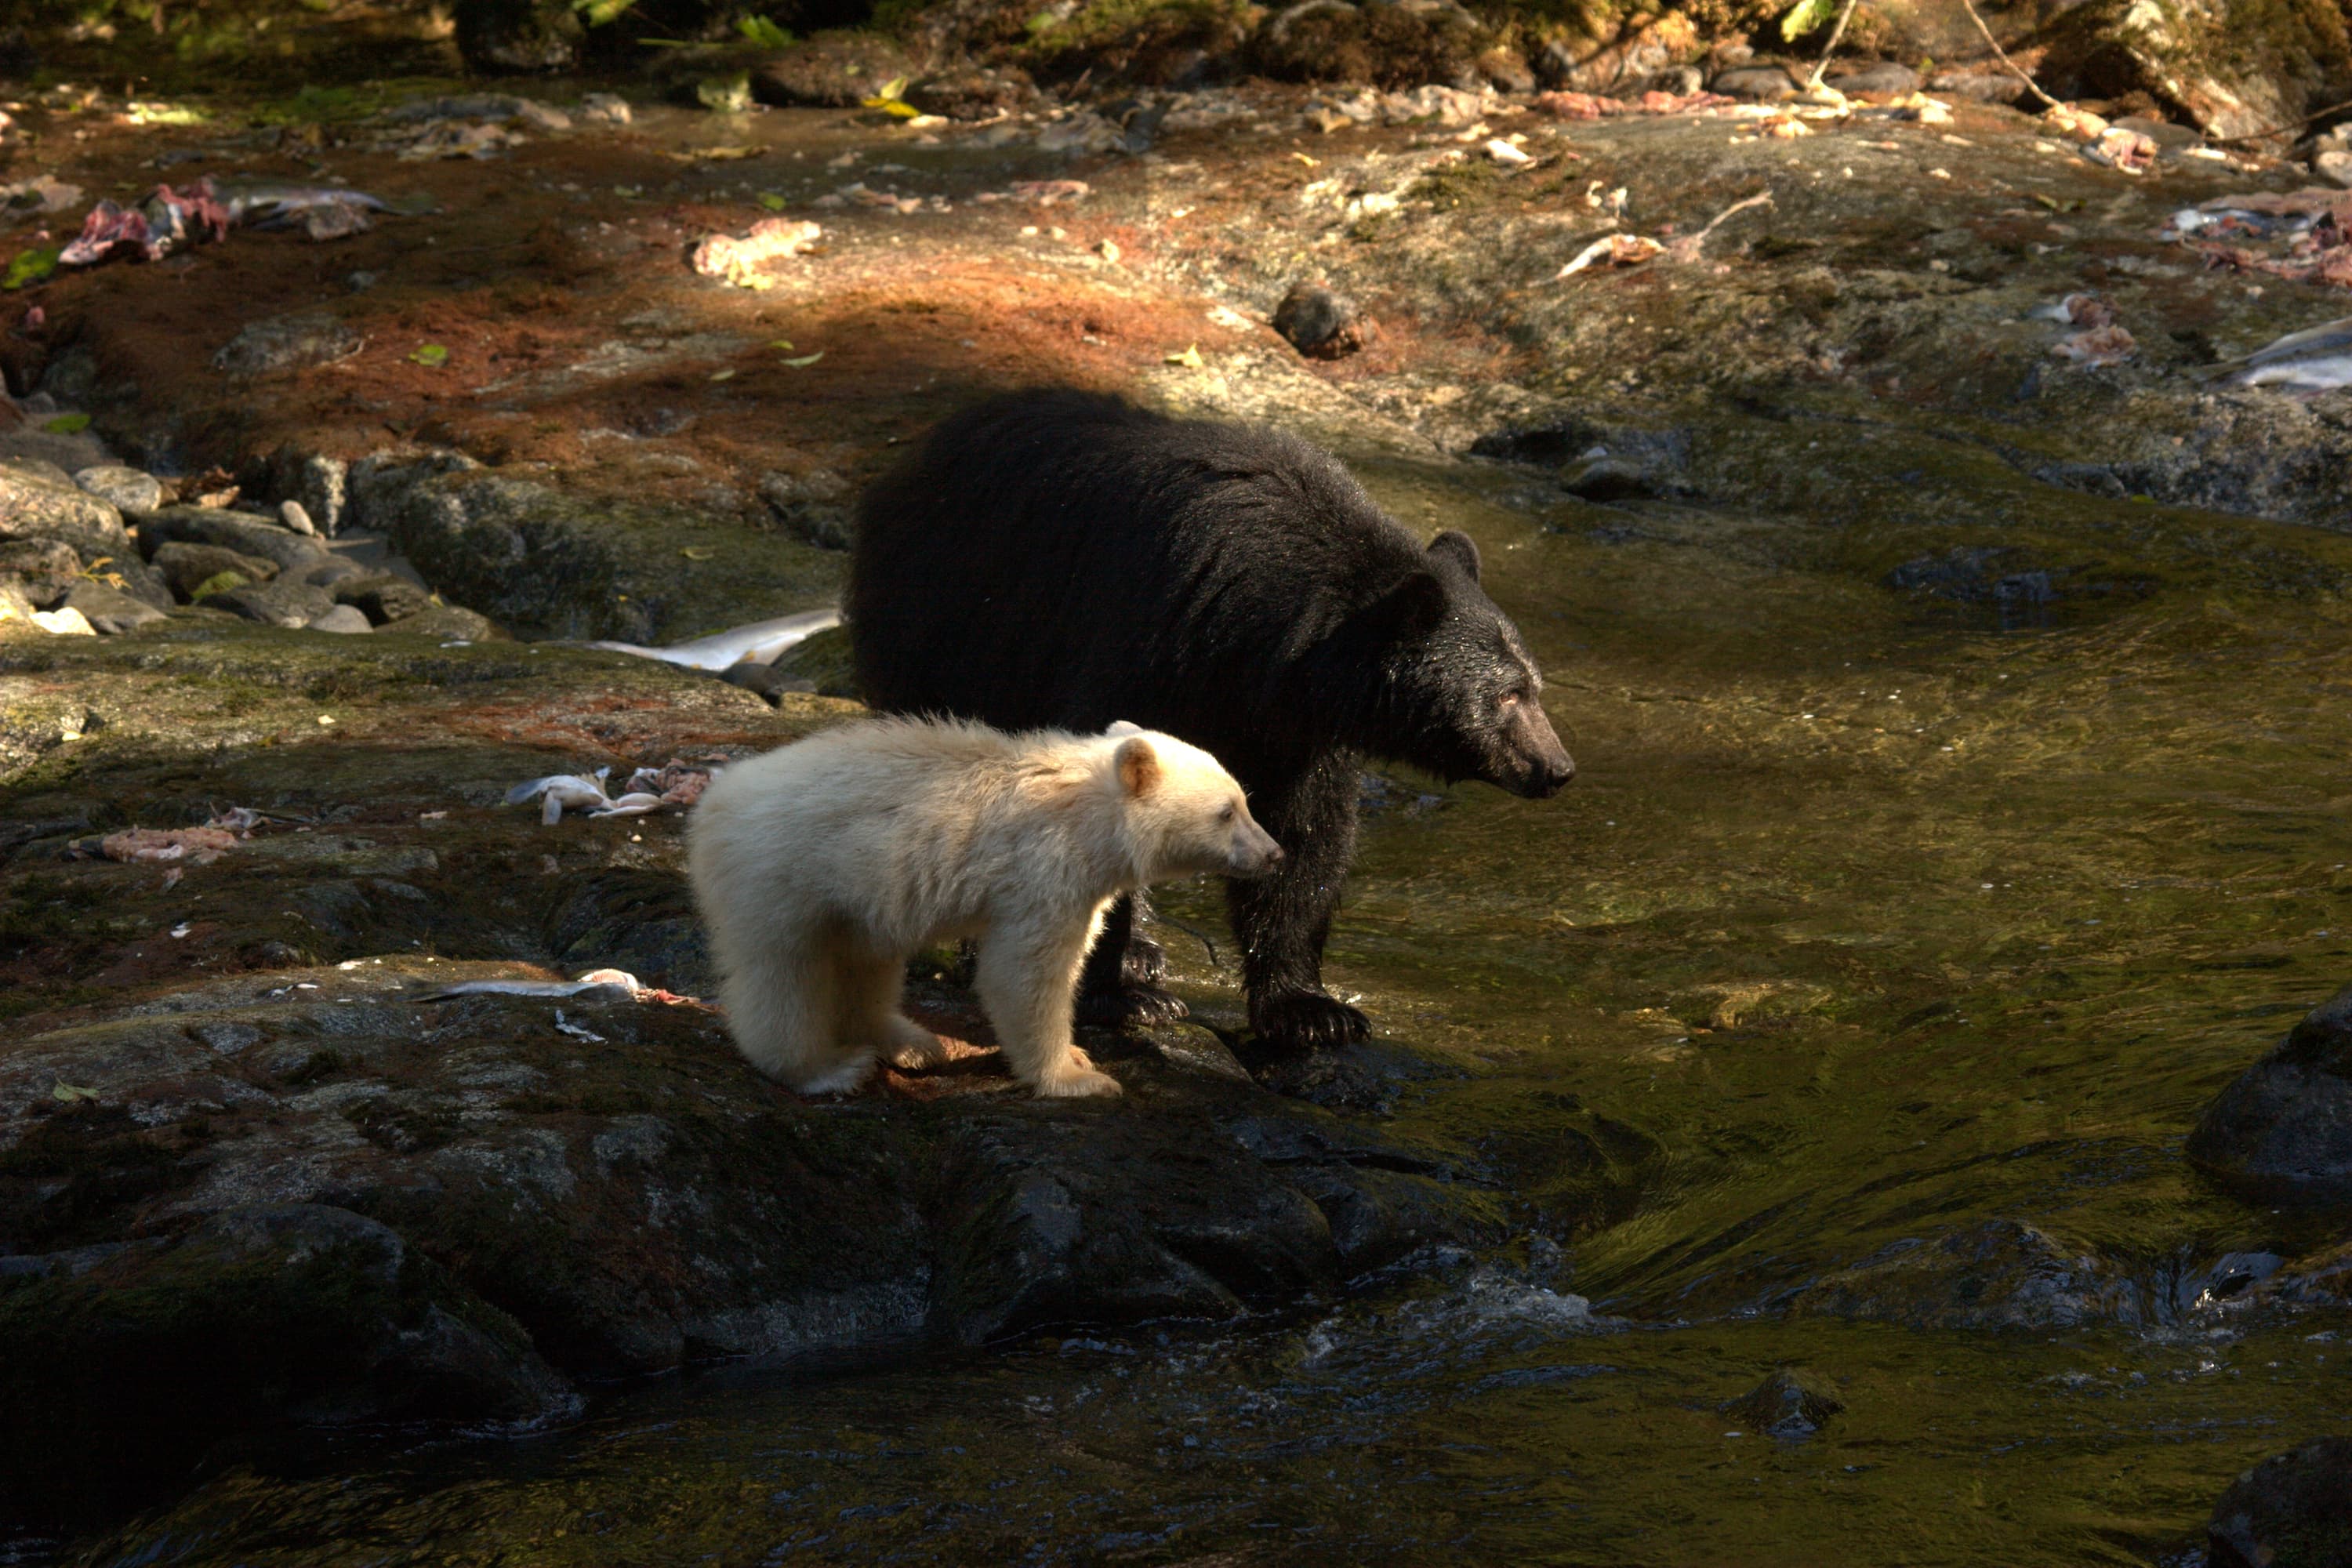 A black bear and a kermode bear. Kermode, or spirit, bears are black bears with a rare gene that turns their fur white. (Photo by Doug Neasloss)